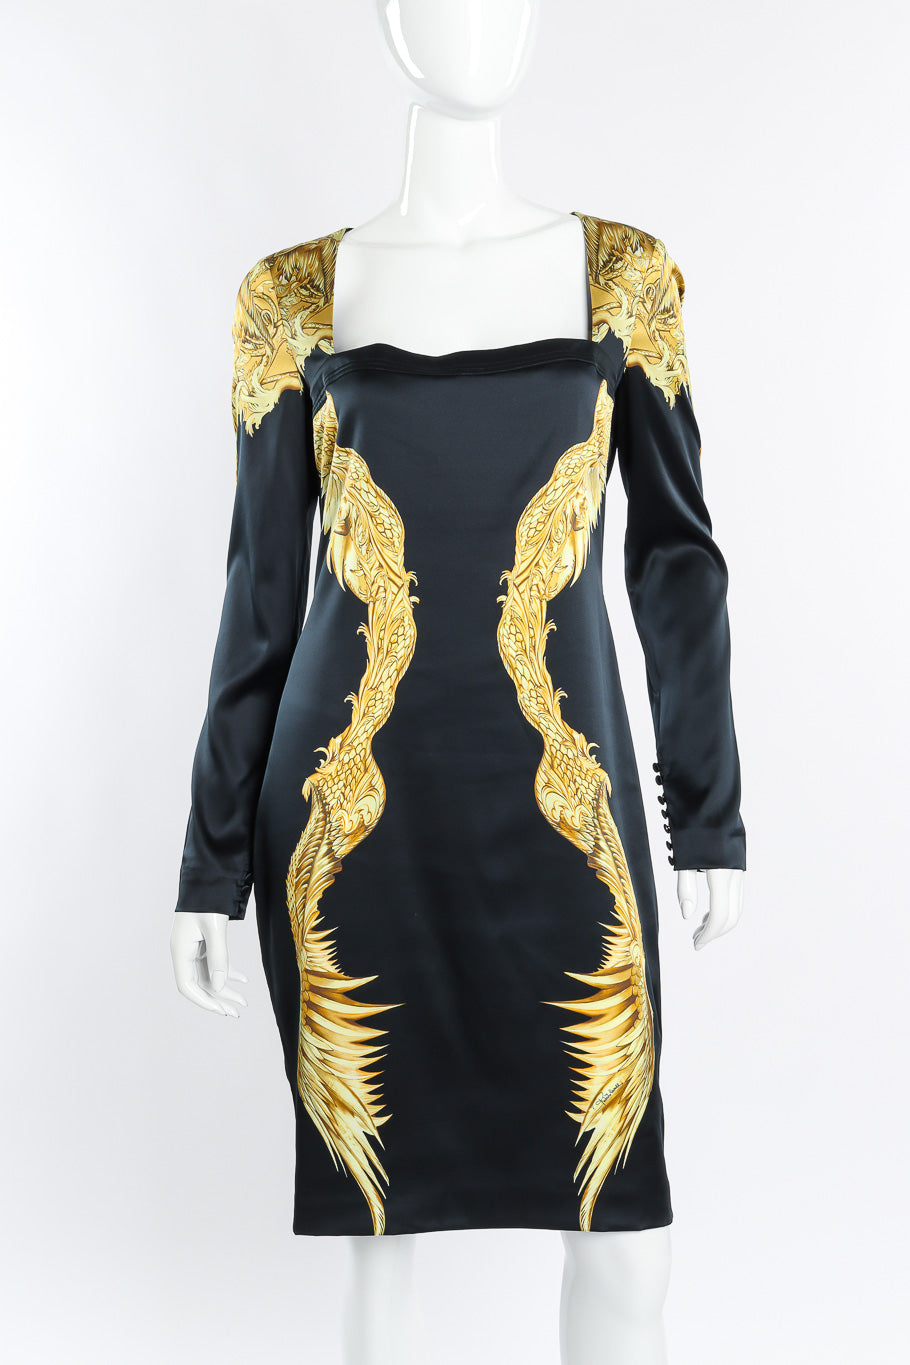 Roberto Cavalli Baroque Wings Graphic Silk Dress front view closeup on mannequin @Recessla